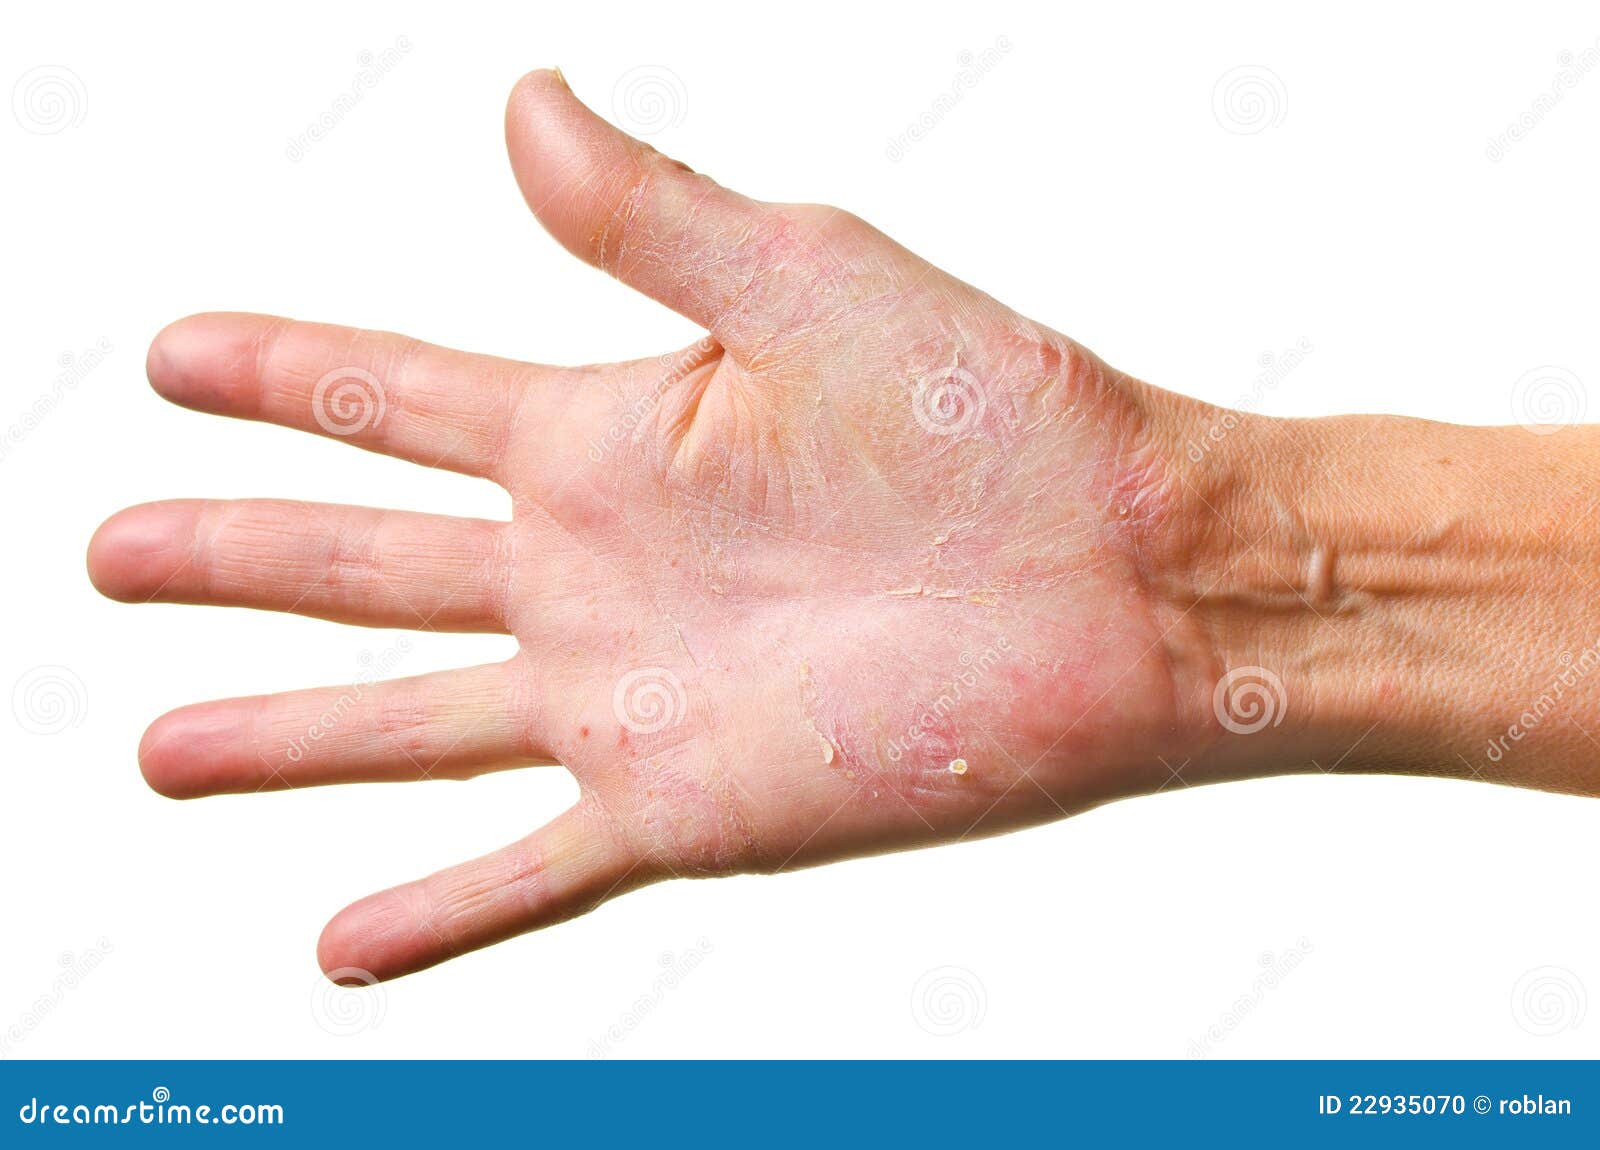 Eczema On A Hand Stock Photo Image Of Dermatitis Problem 22935070